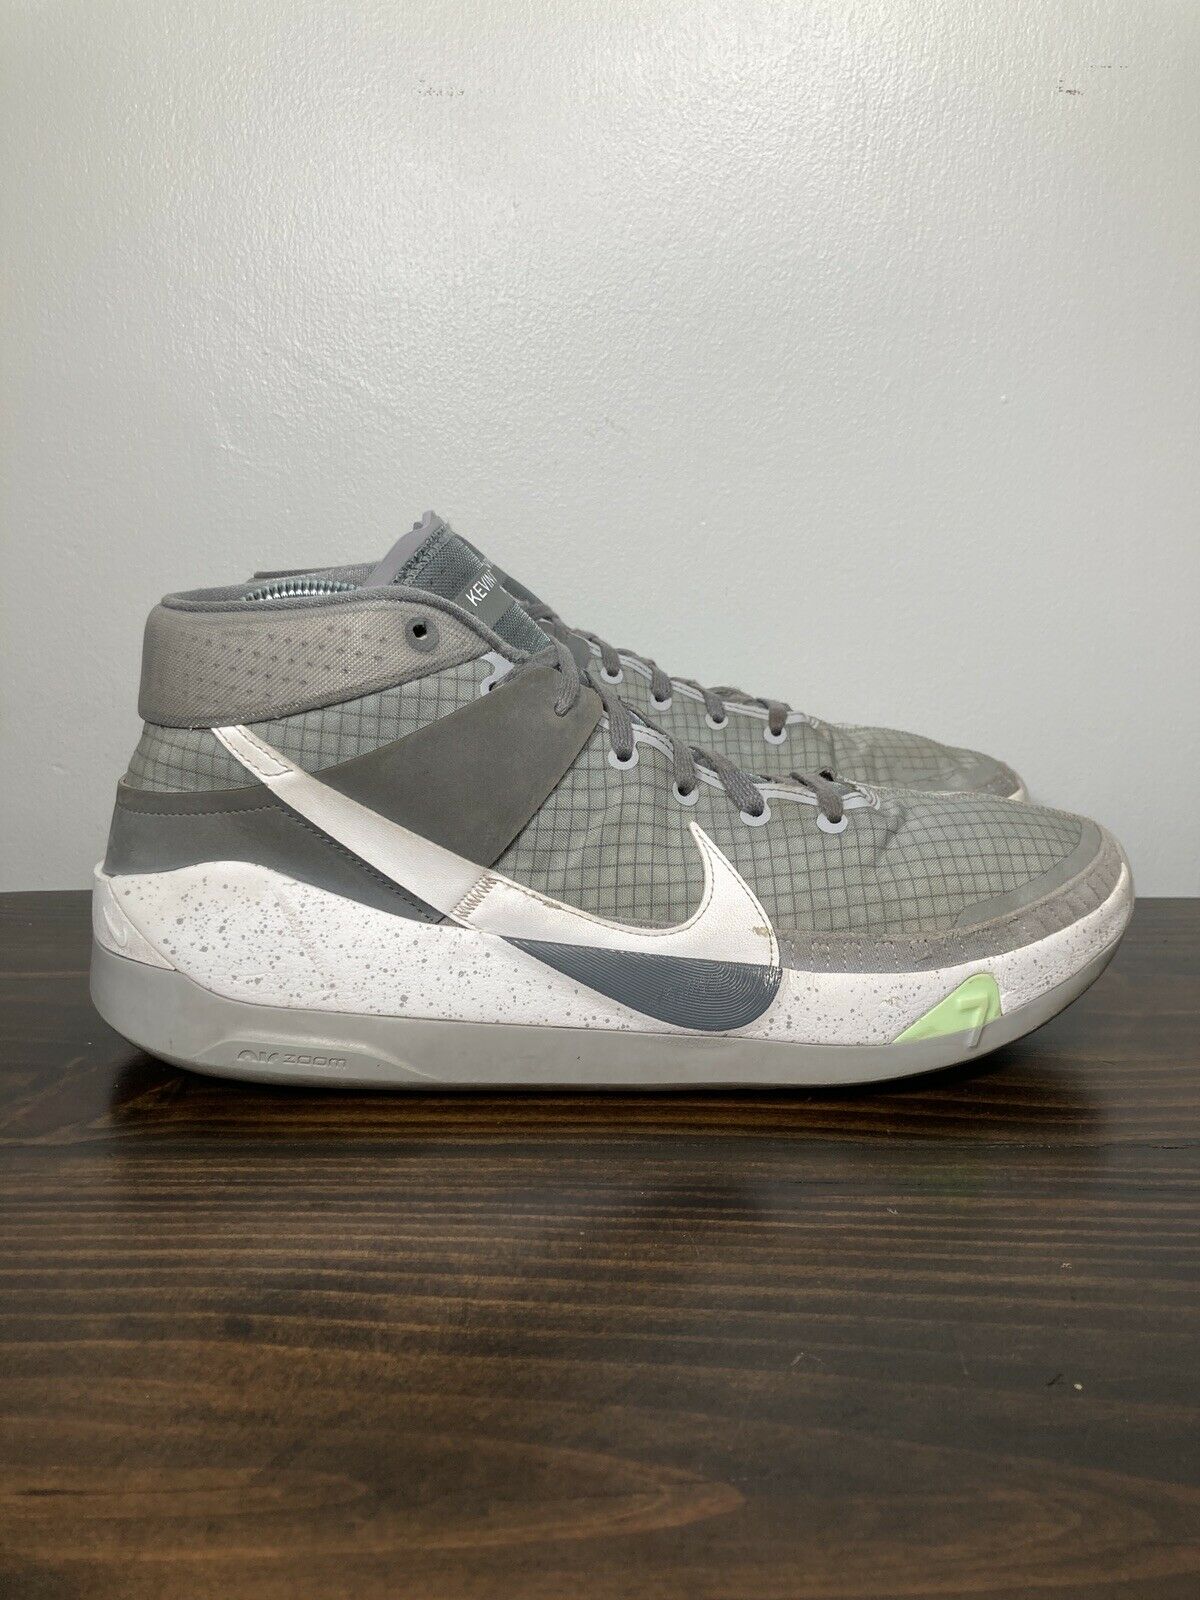 Nike KD 13 TB Wolf Grey Cool Grey White CK6017-001 Basketball Shoes US Size 15